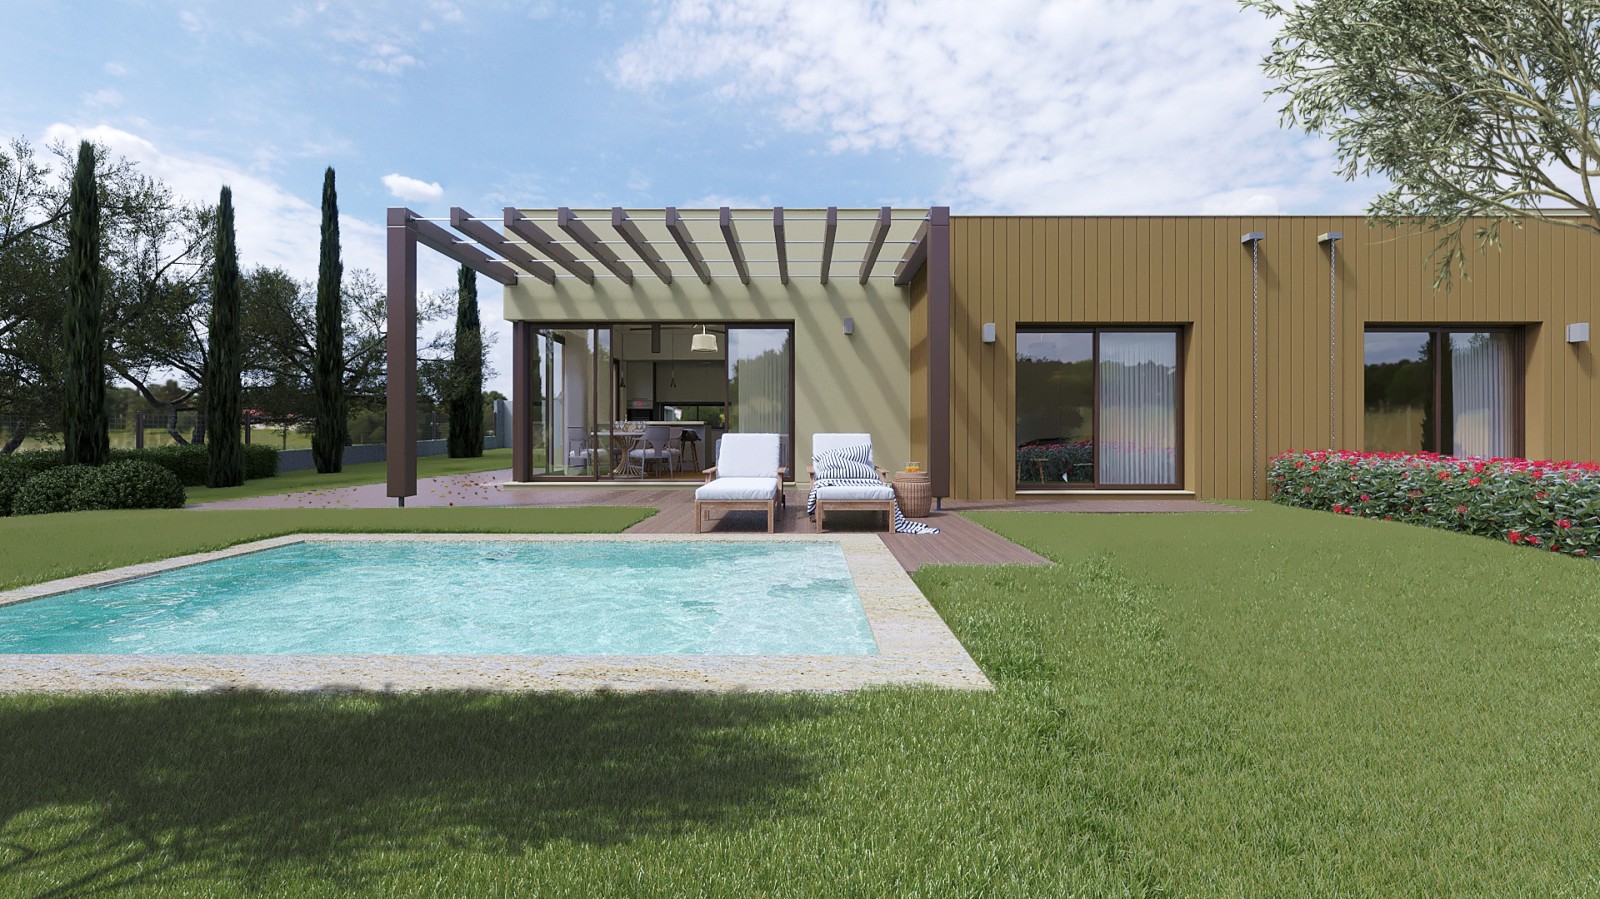 2 bedroom semi-detached villa with swimming pool for sale in Golf resort, Algarve_218839